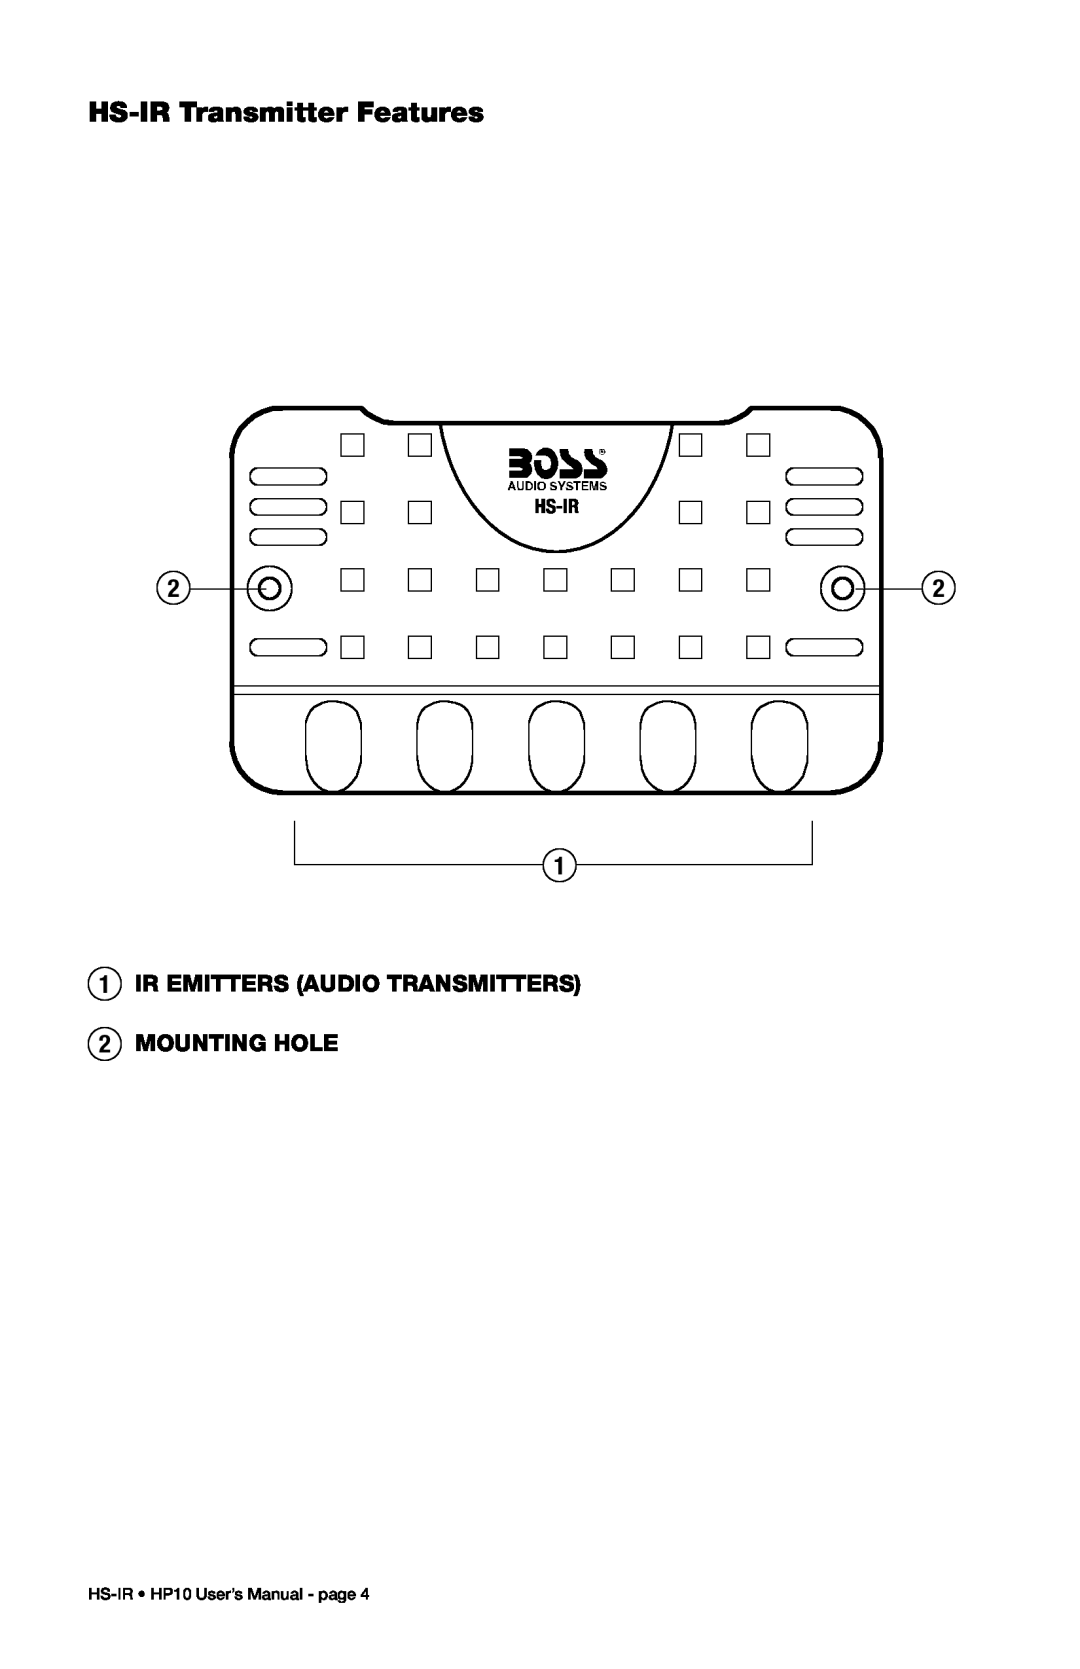 Boss Audio Systems HP-10 user manual HS-IRTransmitter Features, 1IR EMITTERS AUDIO TRANSMITTERS 2MOUNTING HOLE, Hs-Ir 